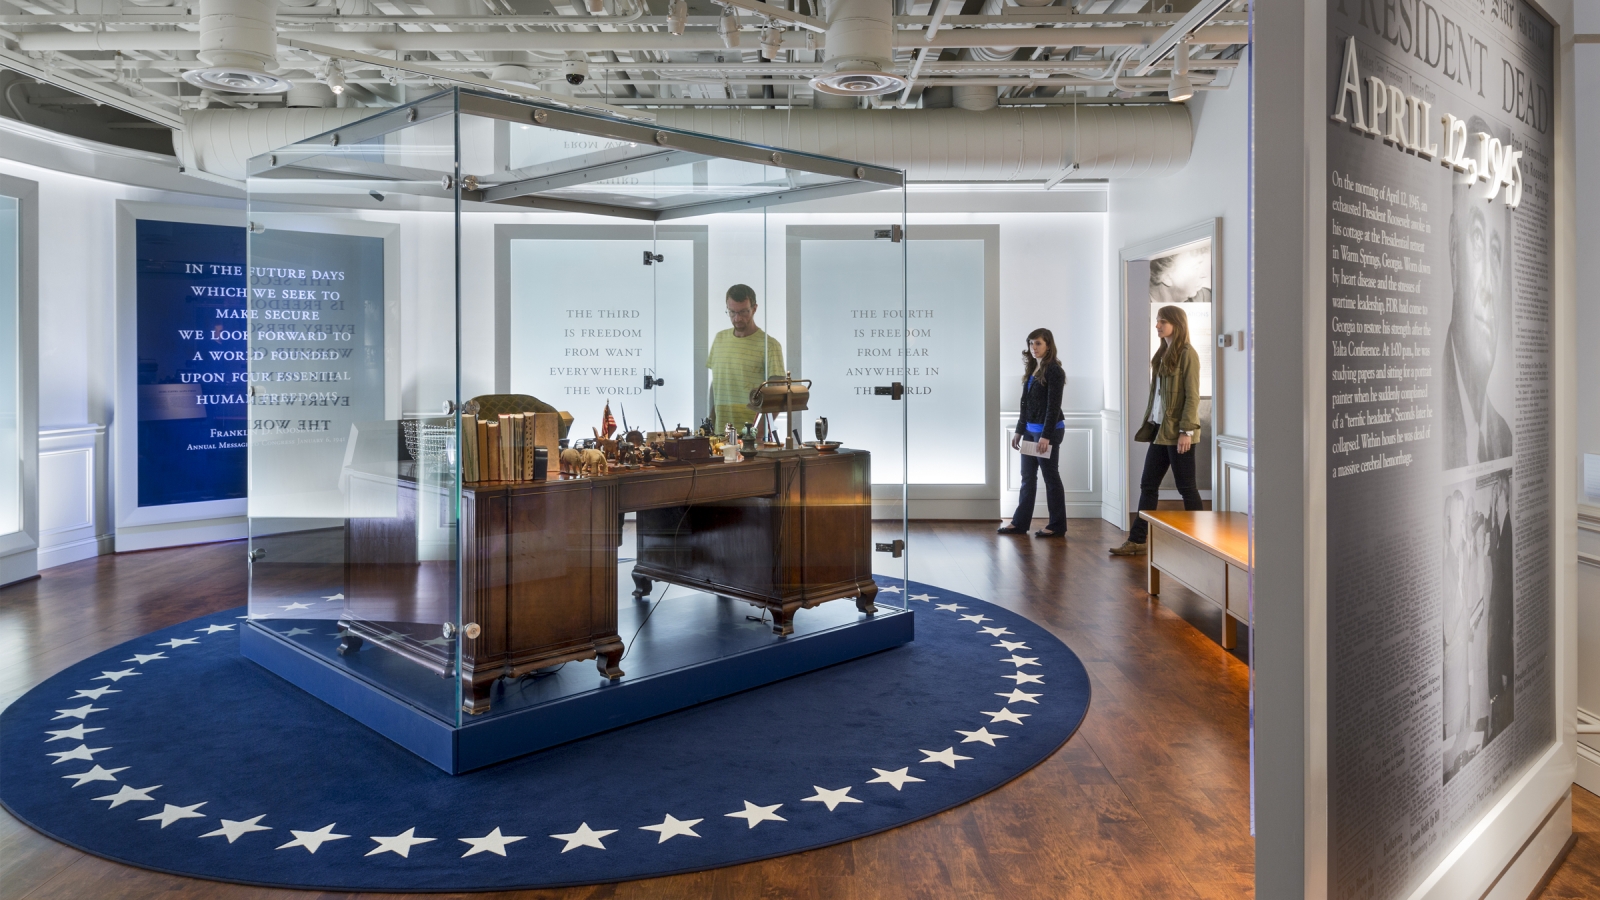 FDR's oval office desk on display